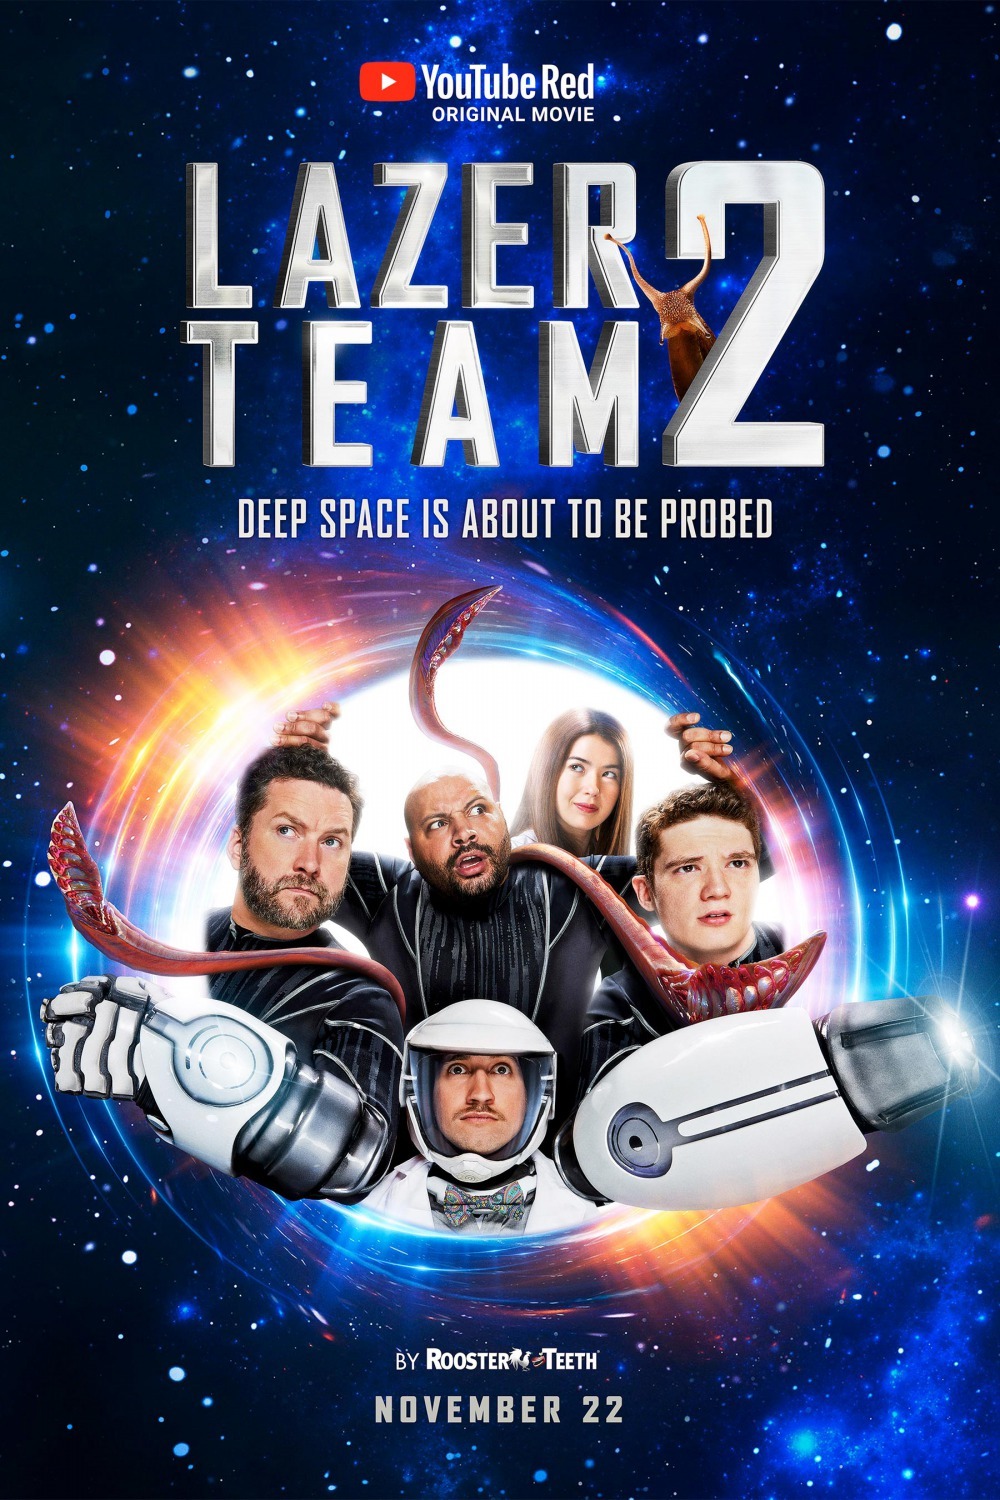 Nonton film Lazer Team 2 layarkaca21 indoxx1 ganool online streaming terbaru